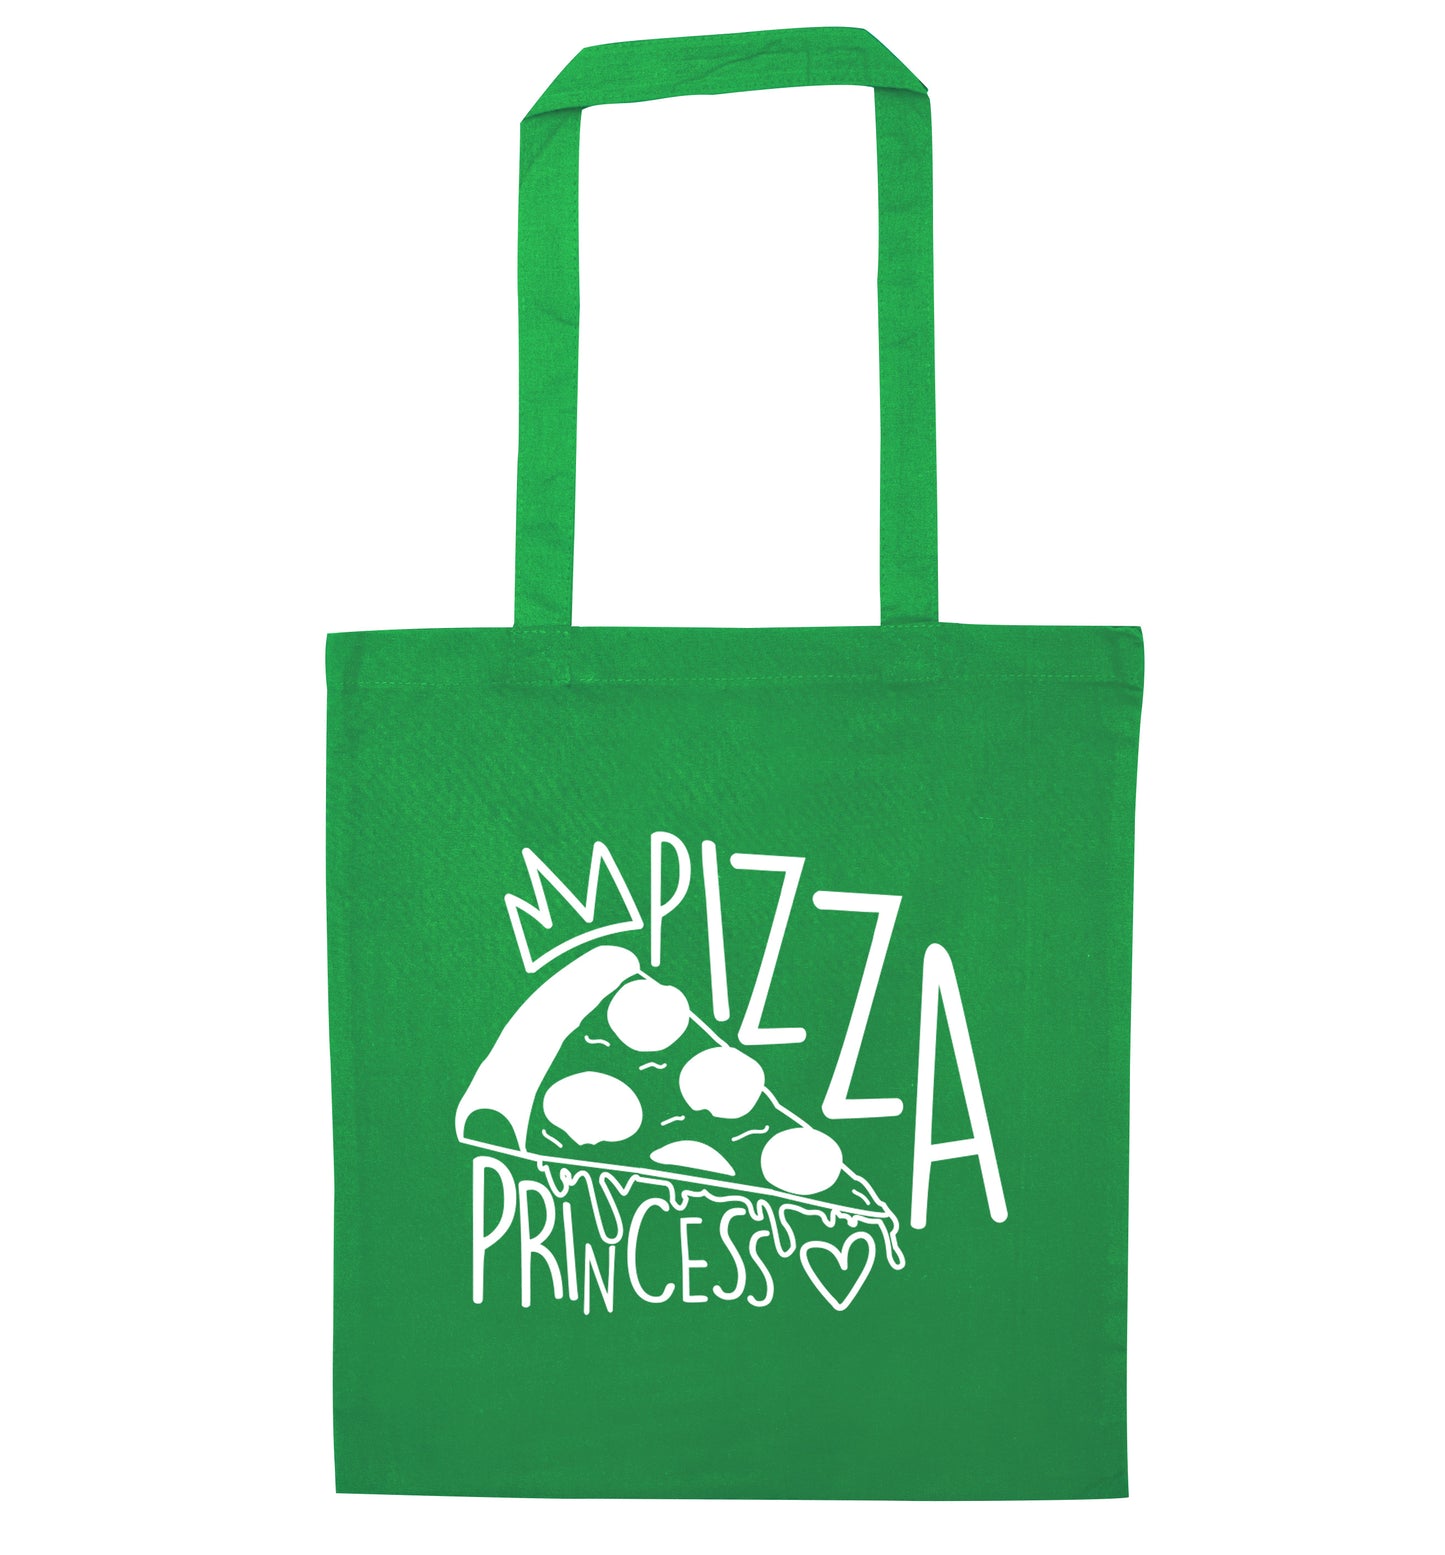 Pizza Princess green tote bag